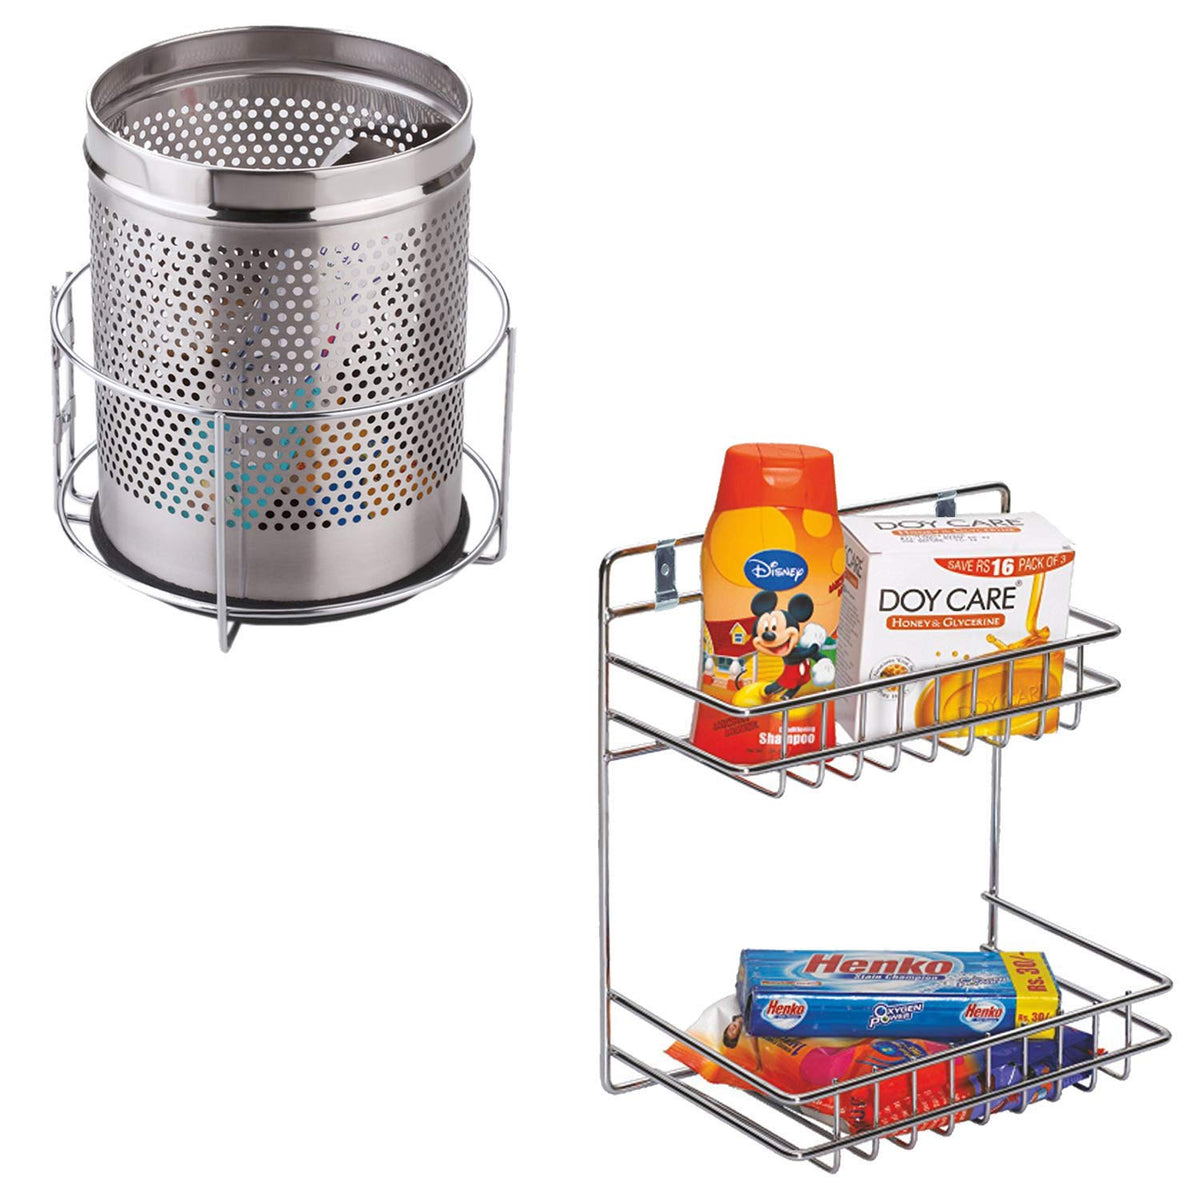 Planet Stainless Steel Detergent Holder and Bin Holder/Dustbin Holder (Chrome-Wall Mount)